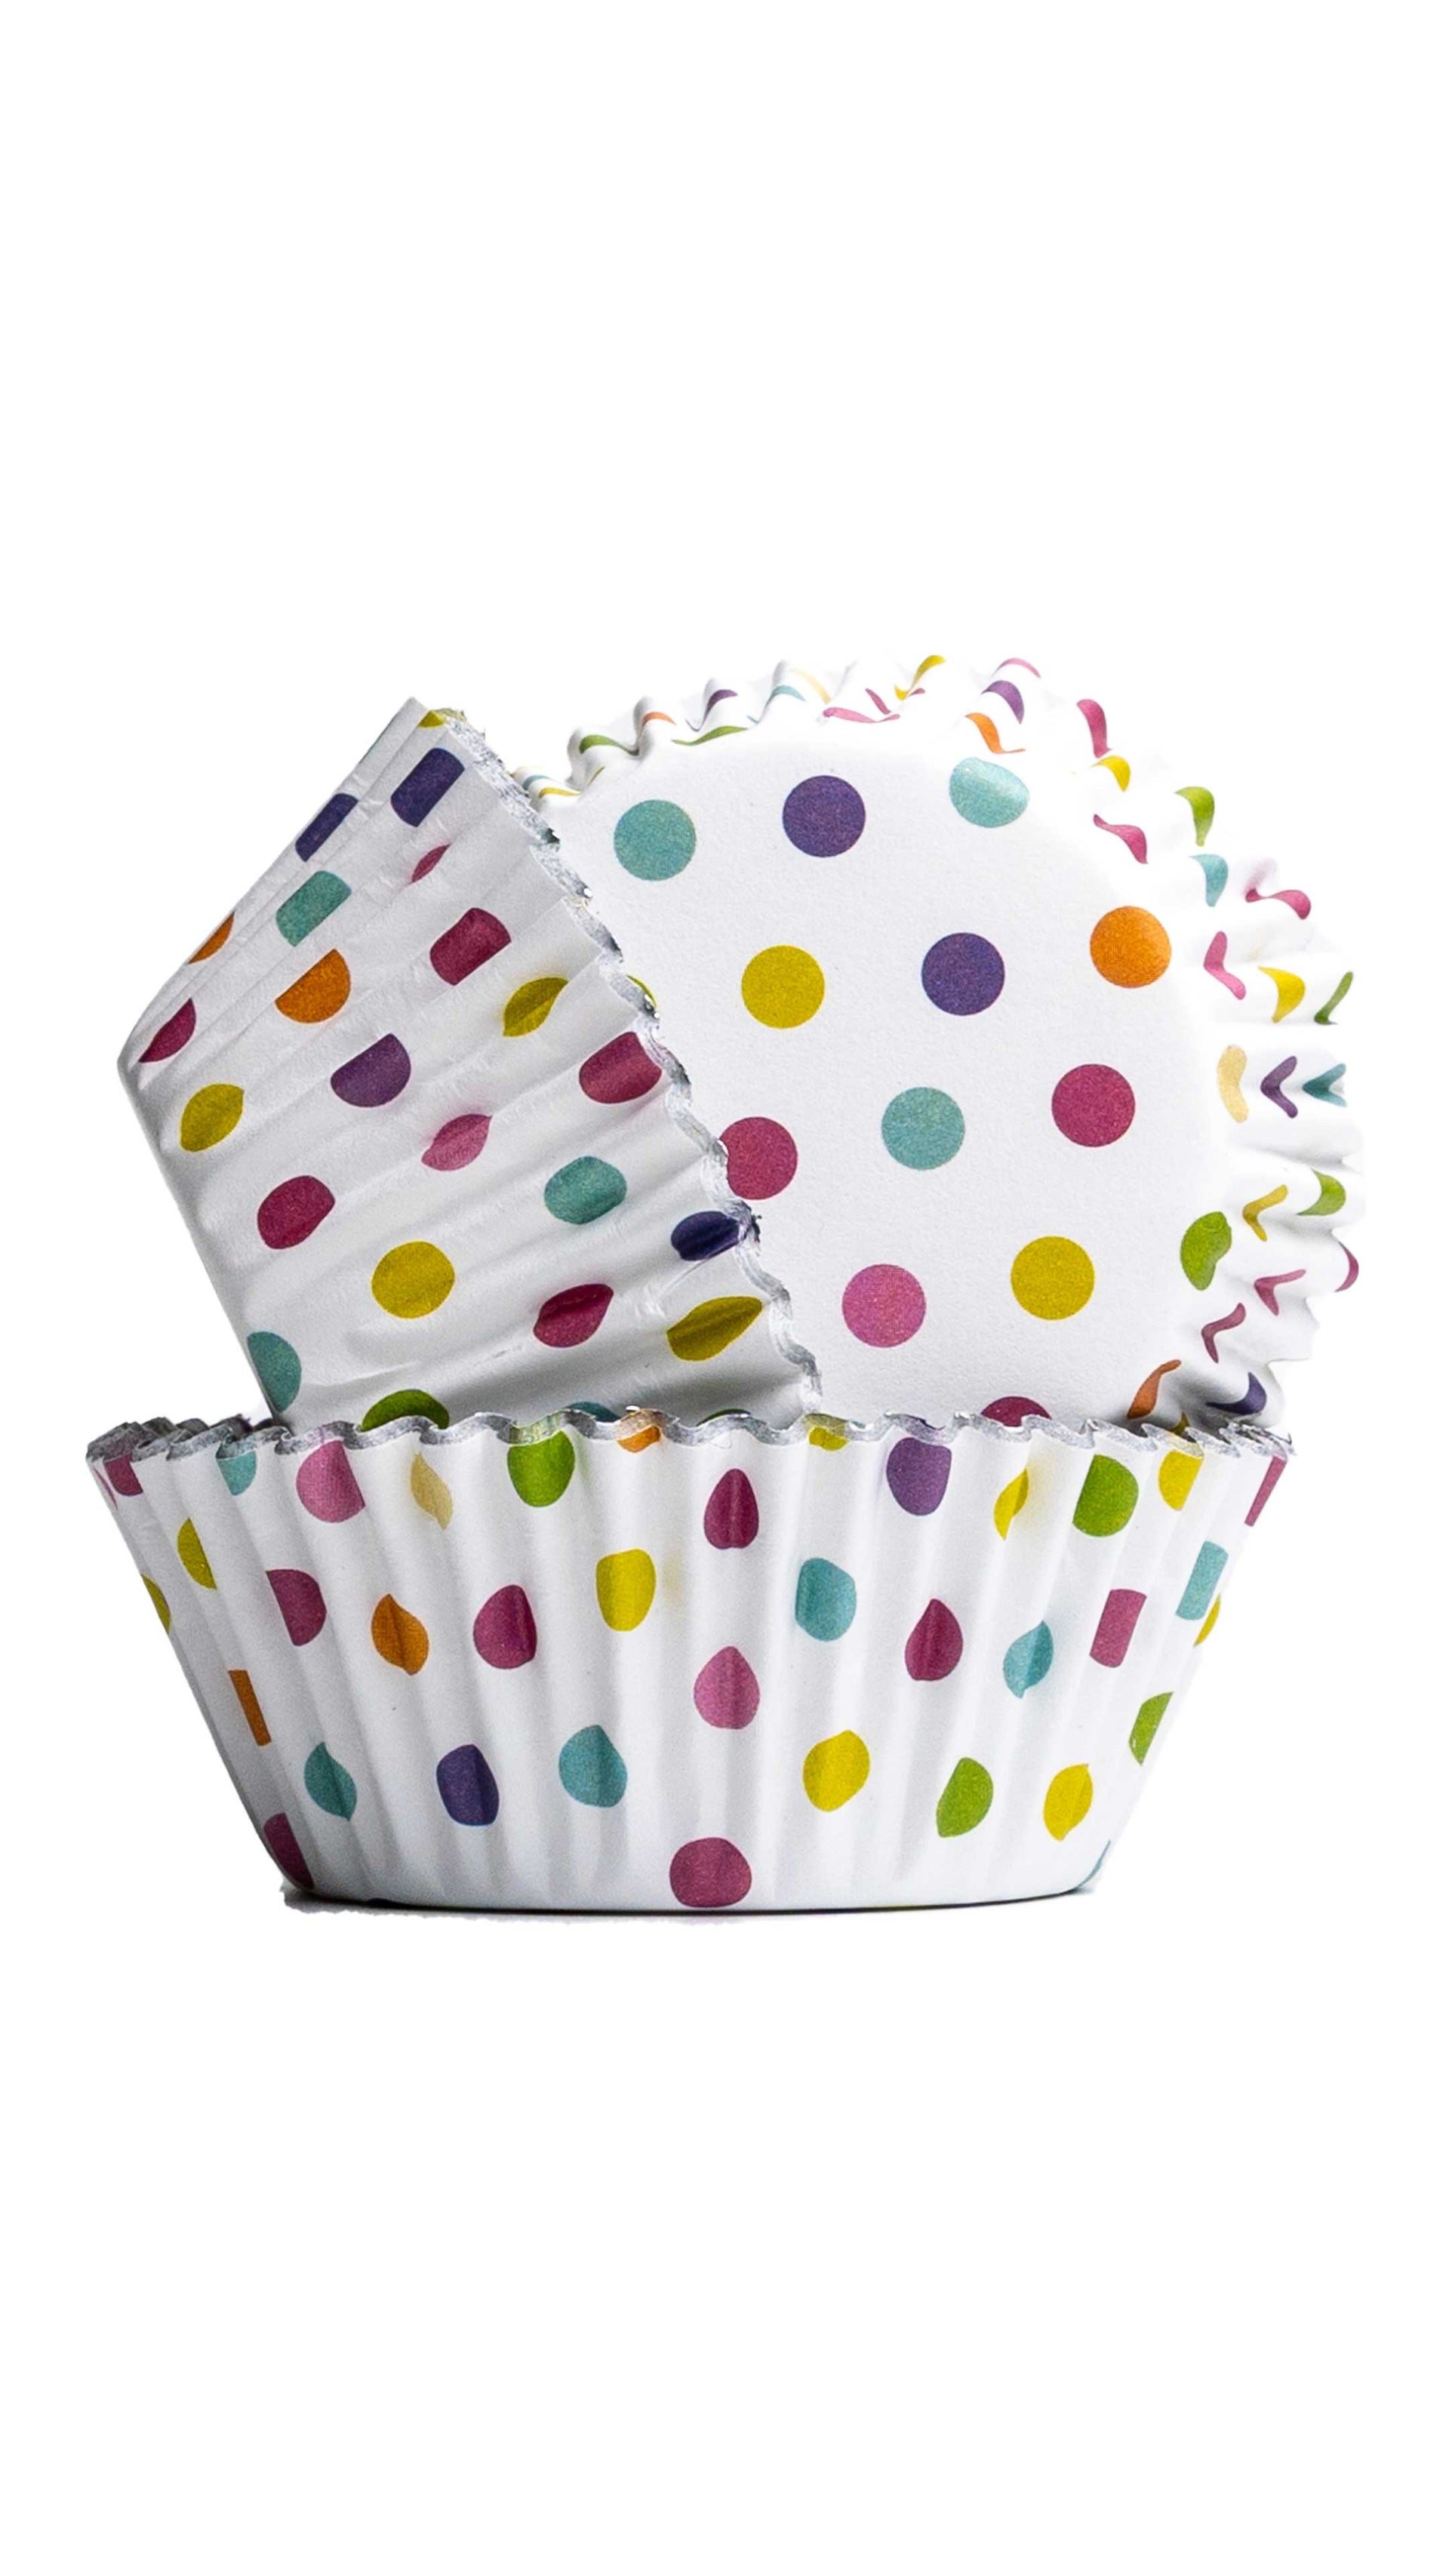 PME - Cupcake Cases - Polka Dot (Multi-Colour) - 30 Pack Cupcake Cases PME